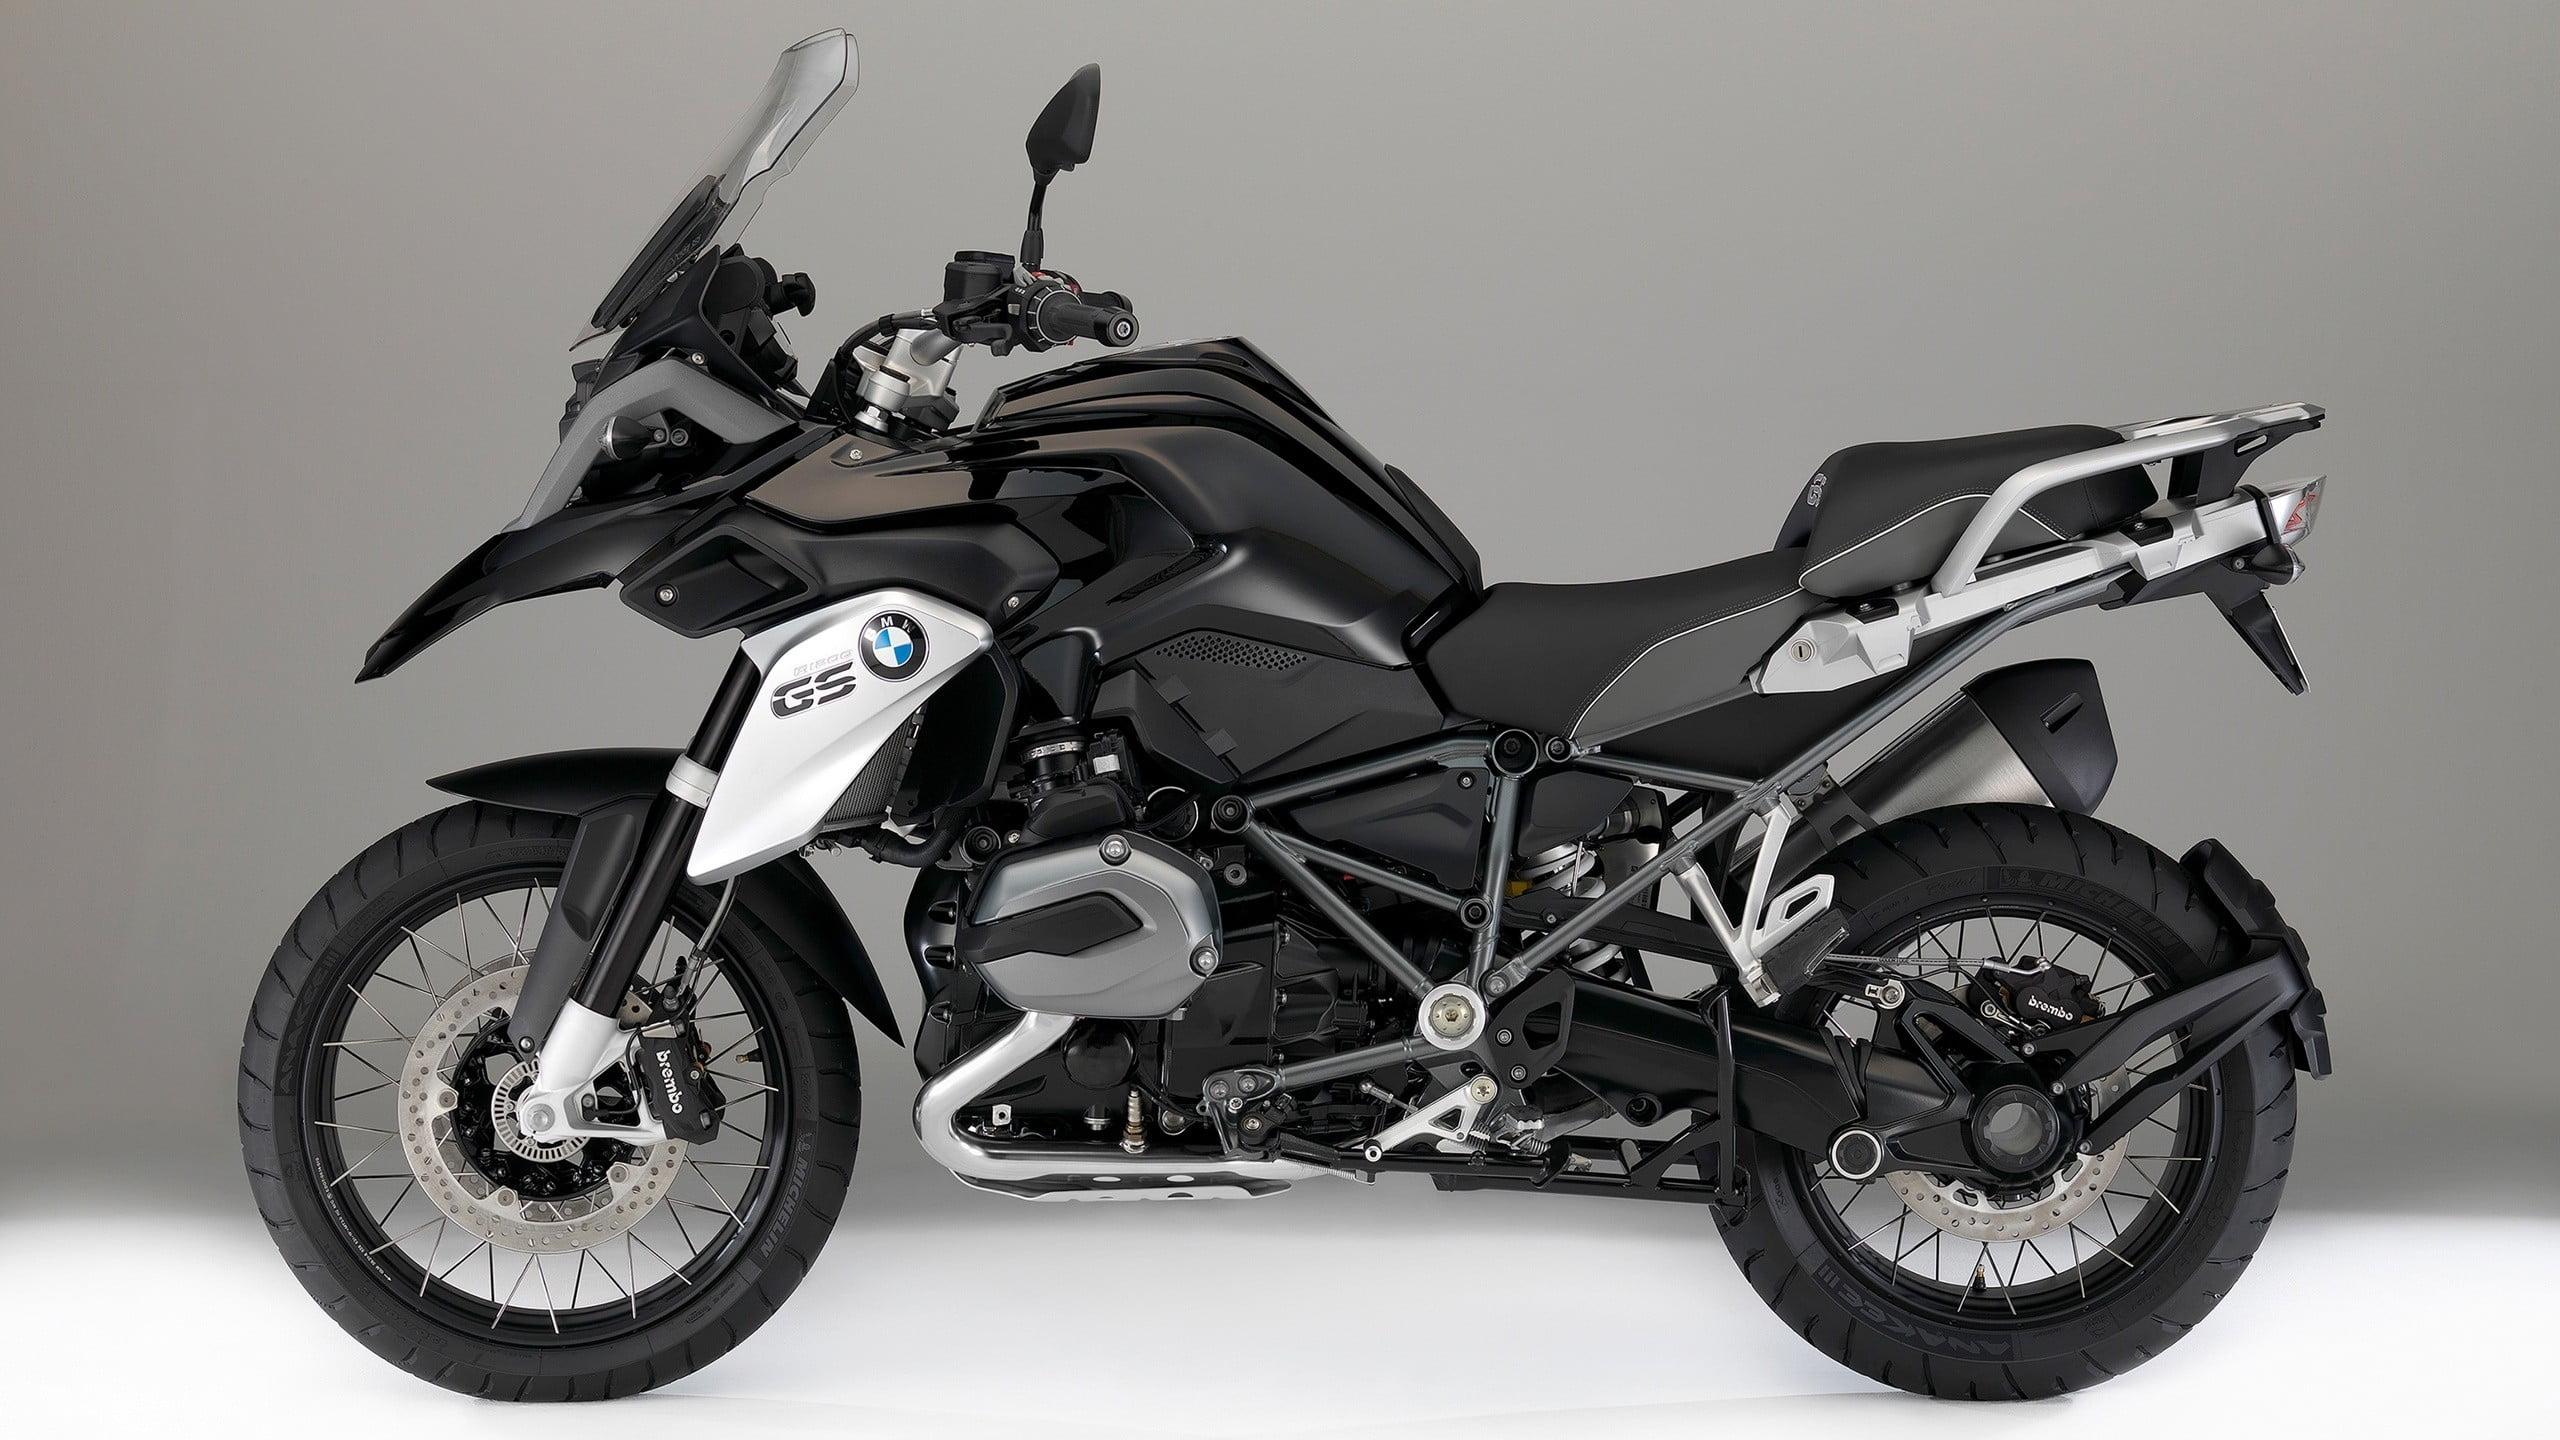 Black and gray sports bike, motorcycle, BMW GS BMW